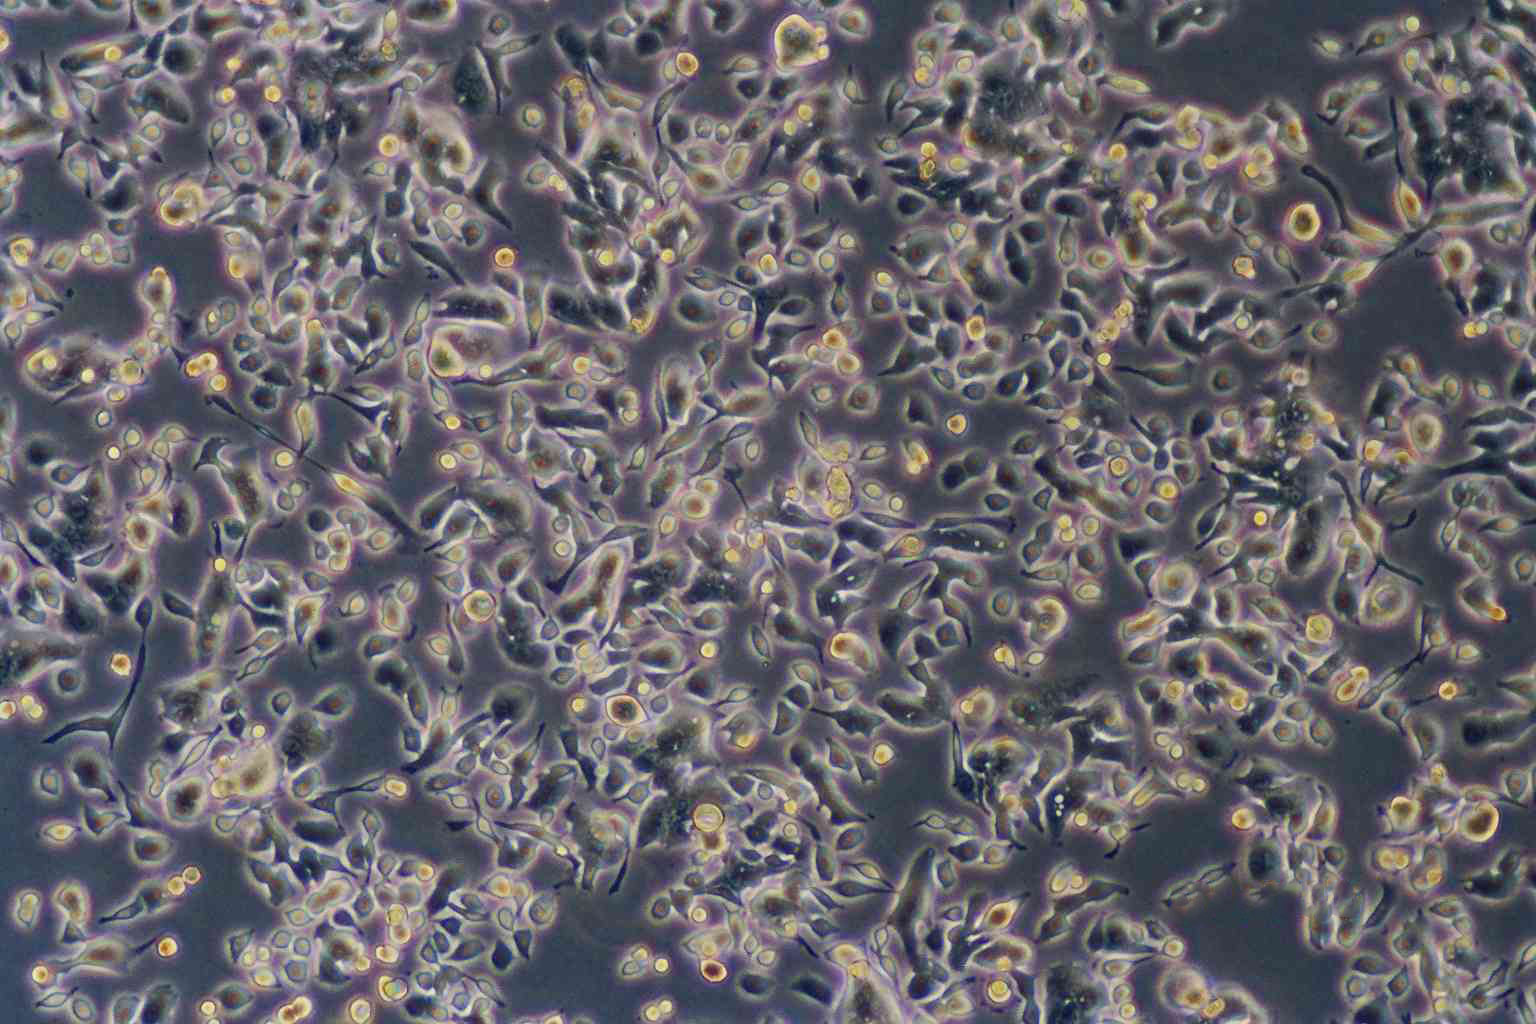 V79-4 epithelioid cells中国仓鼠肺细胞系,V79-4 epithelioid cells